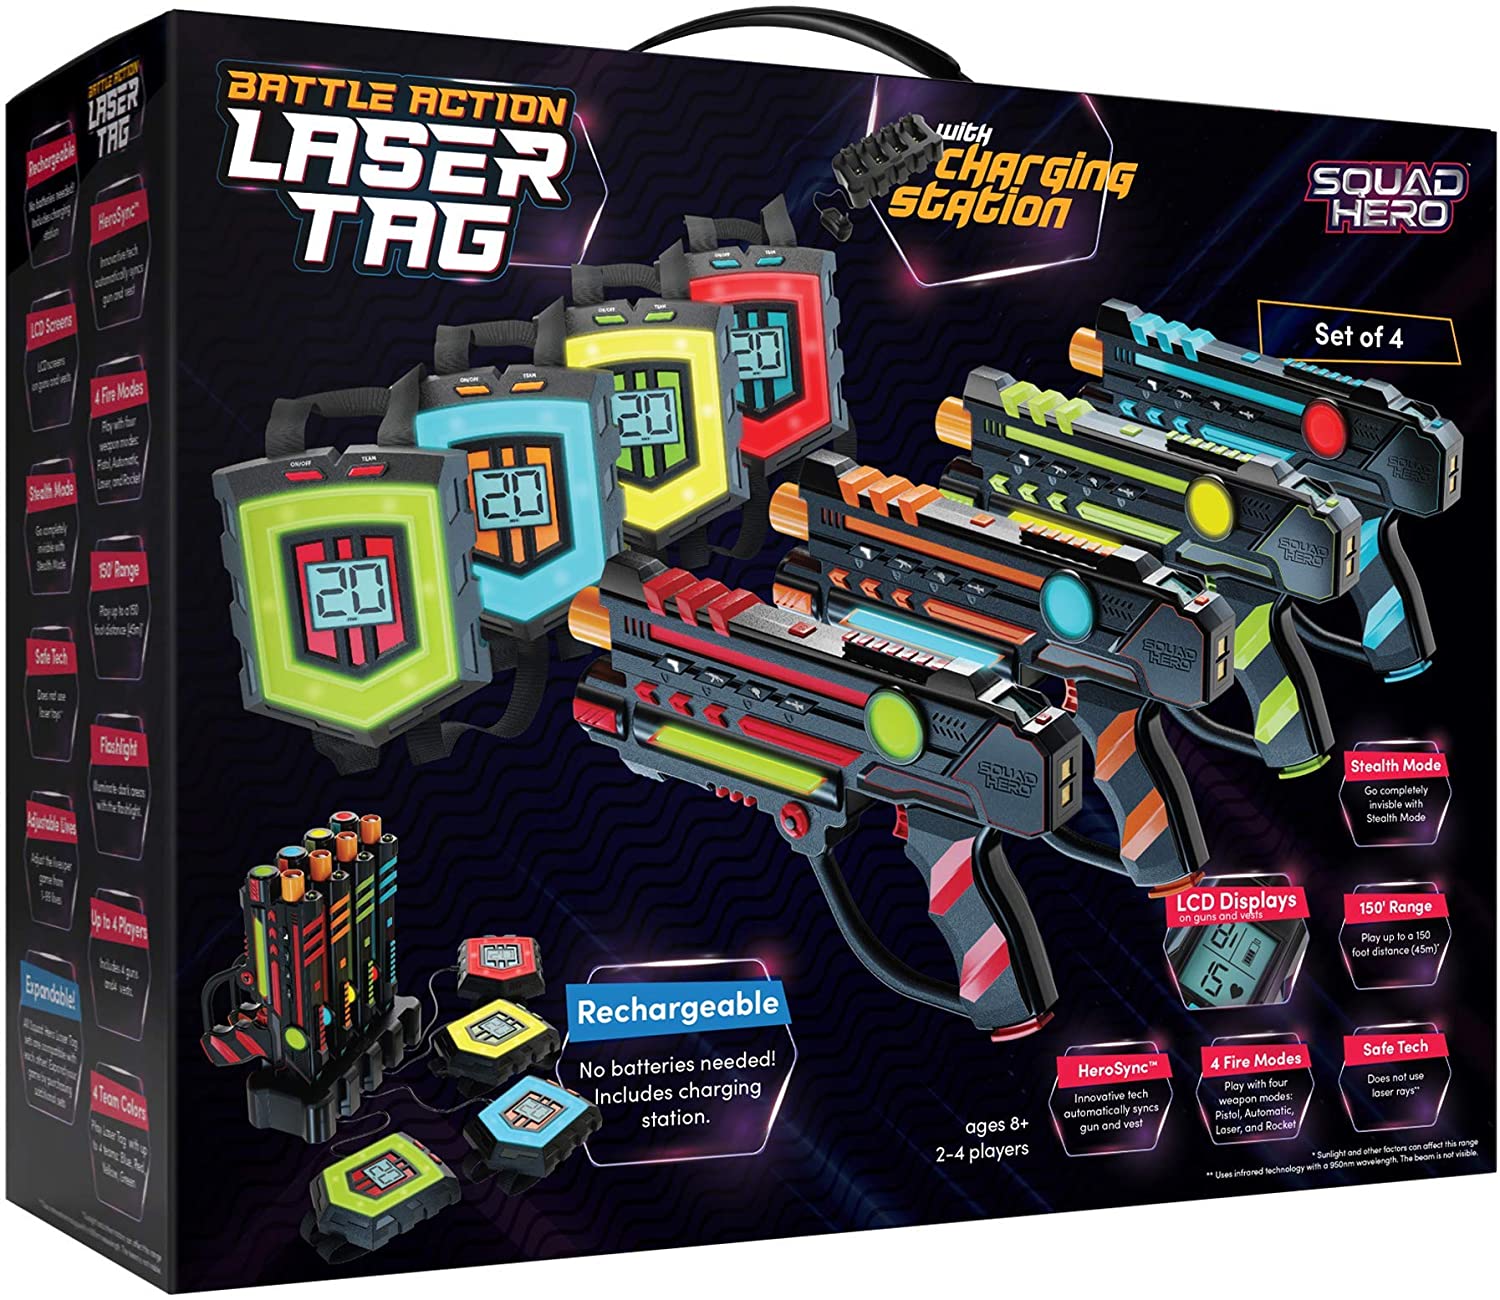 Squad Hero Rechargeable Laser Tag Set -  4 Infrared Guns & Vests $150